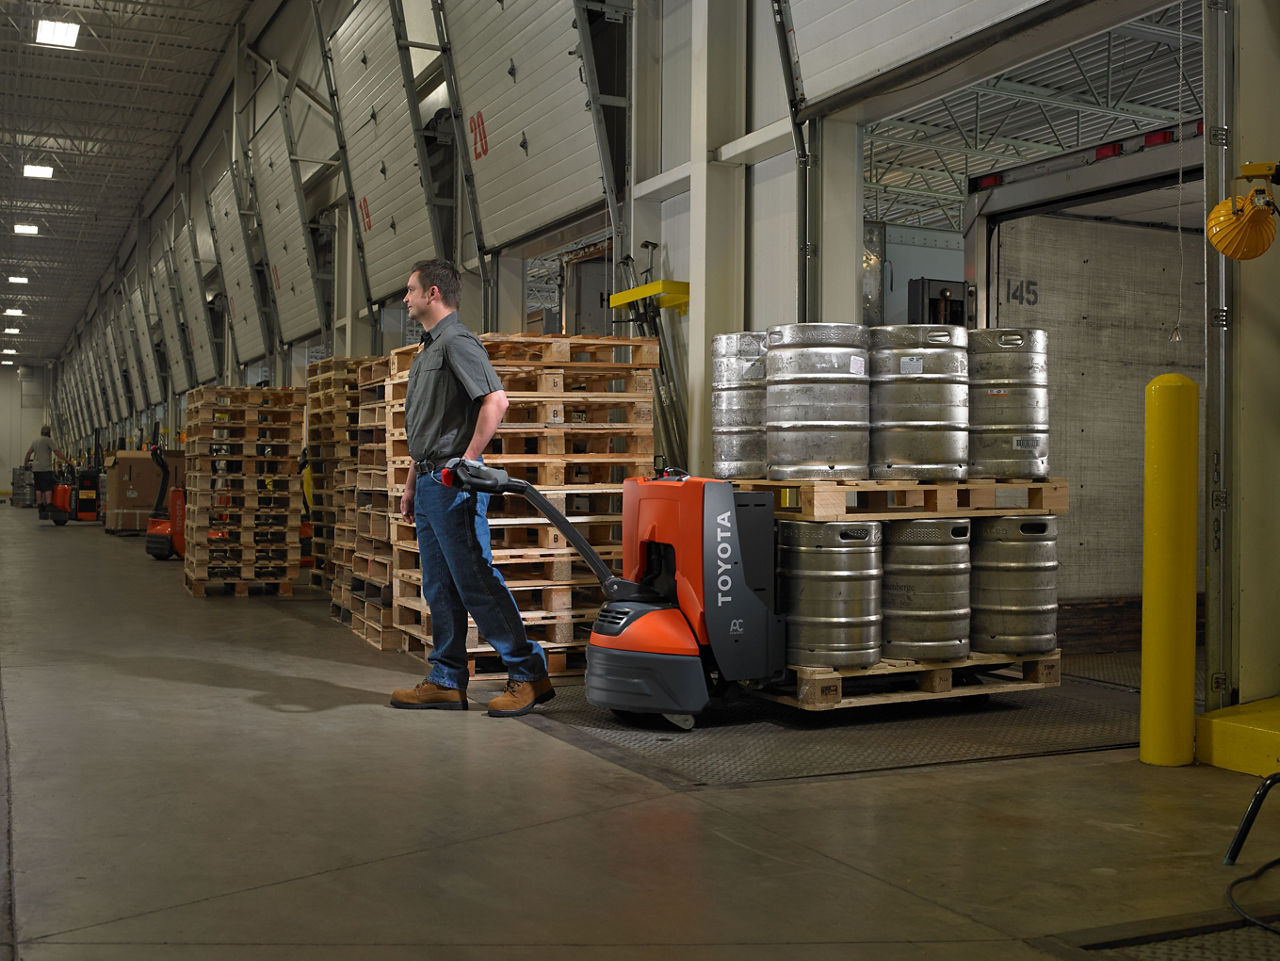 large electric pallet jack being used in warehouse carrying beer kegs